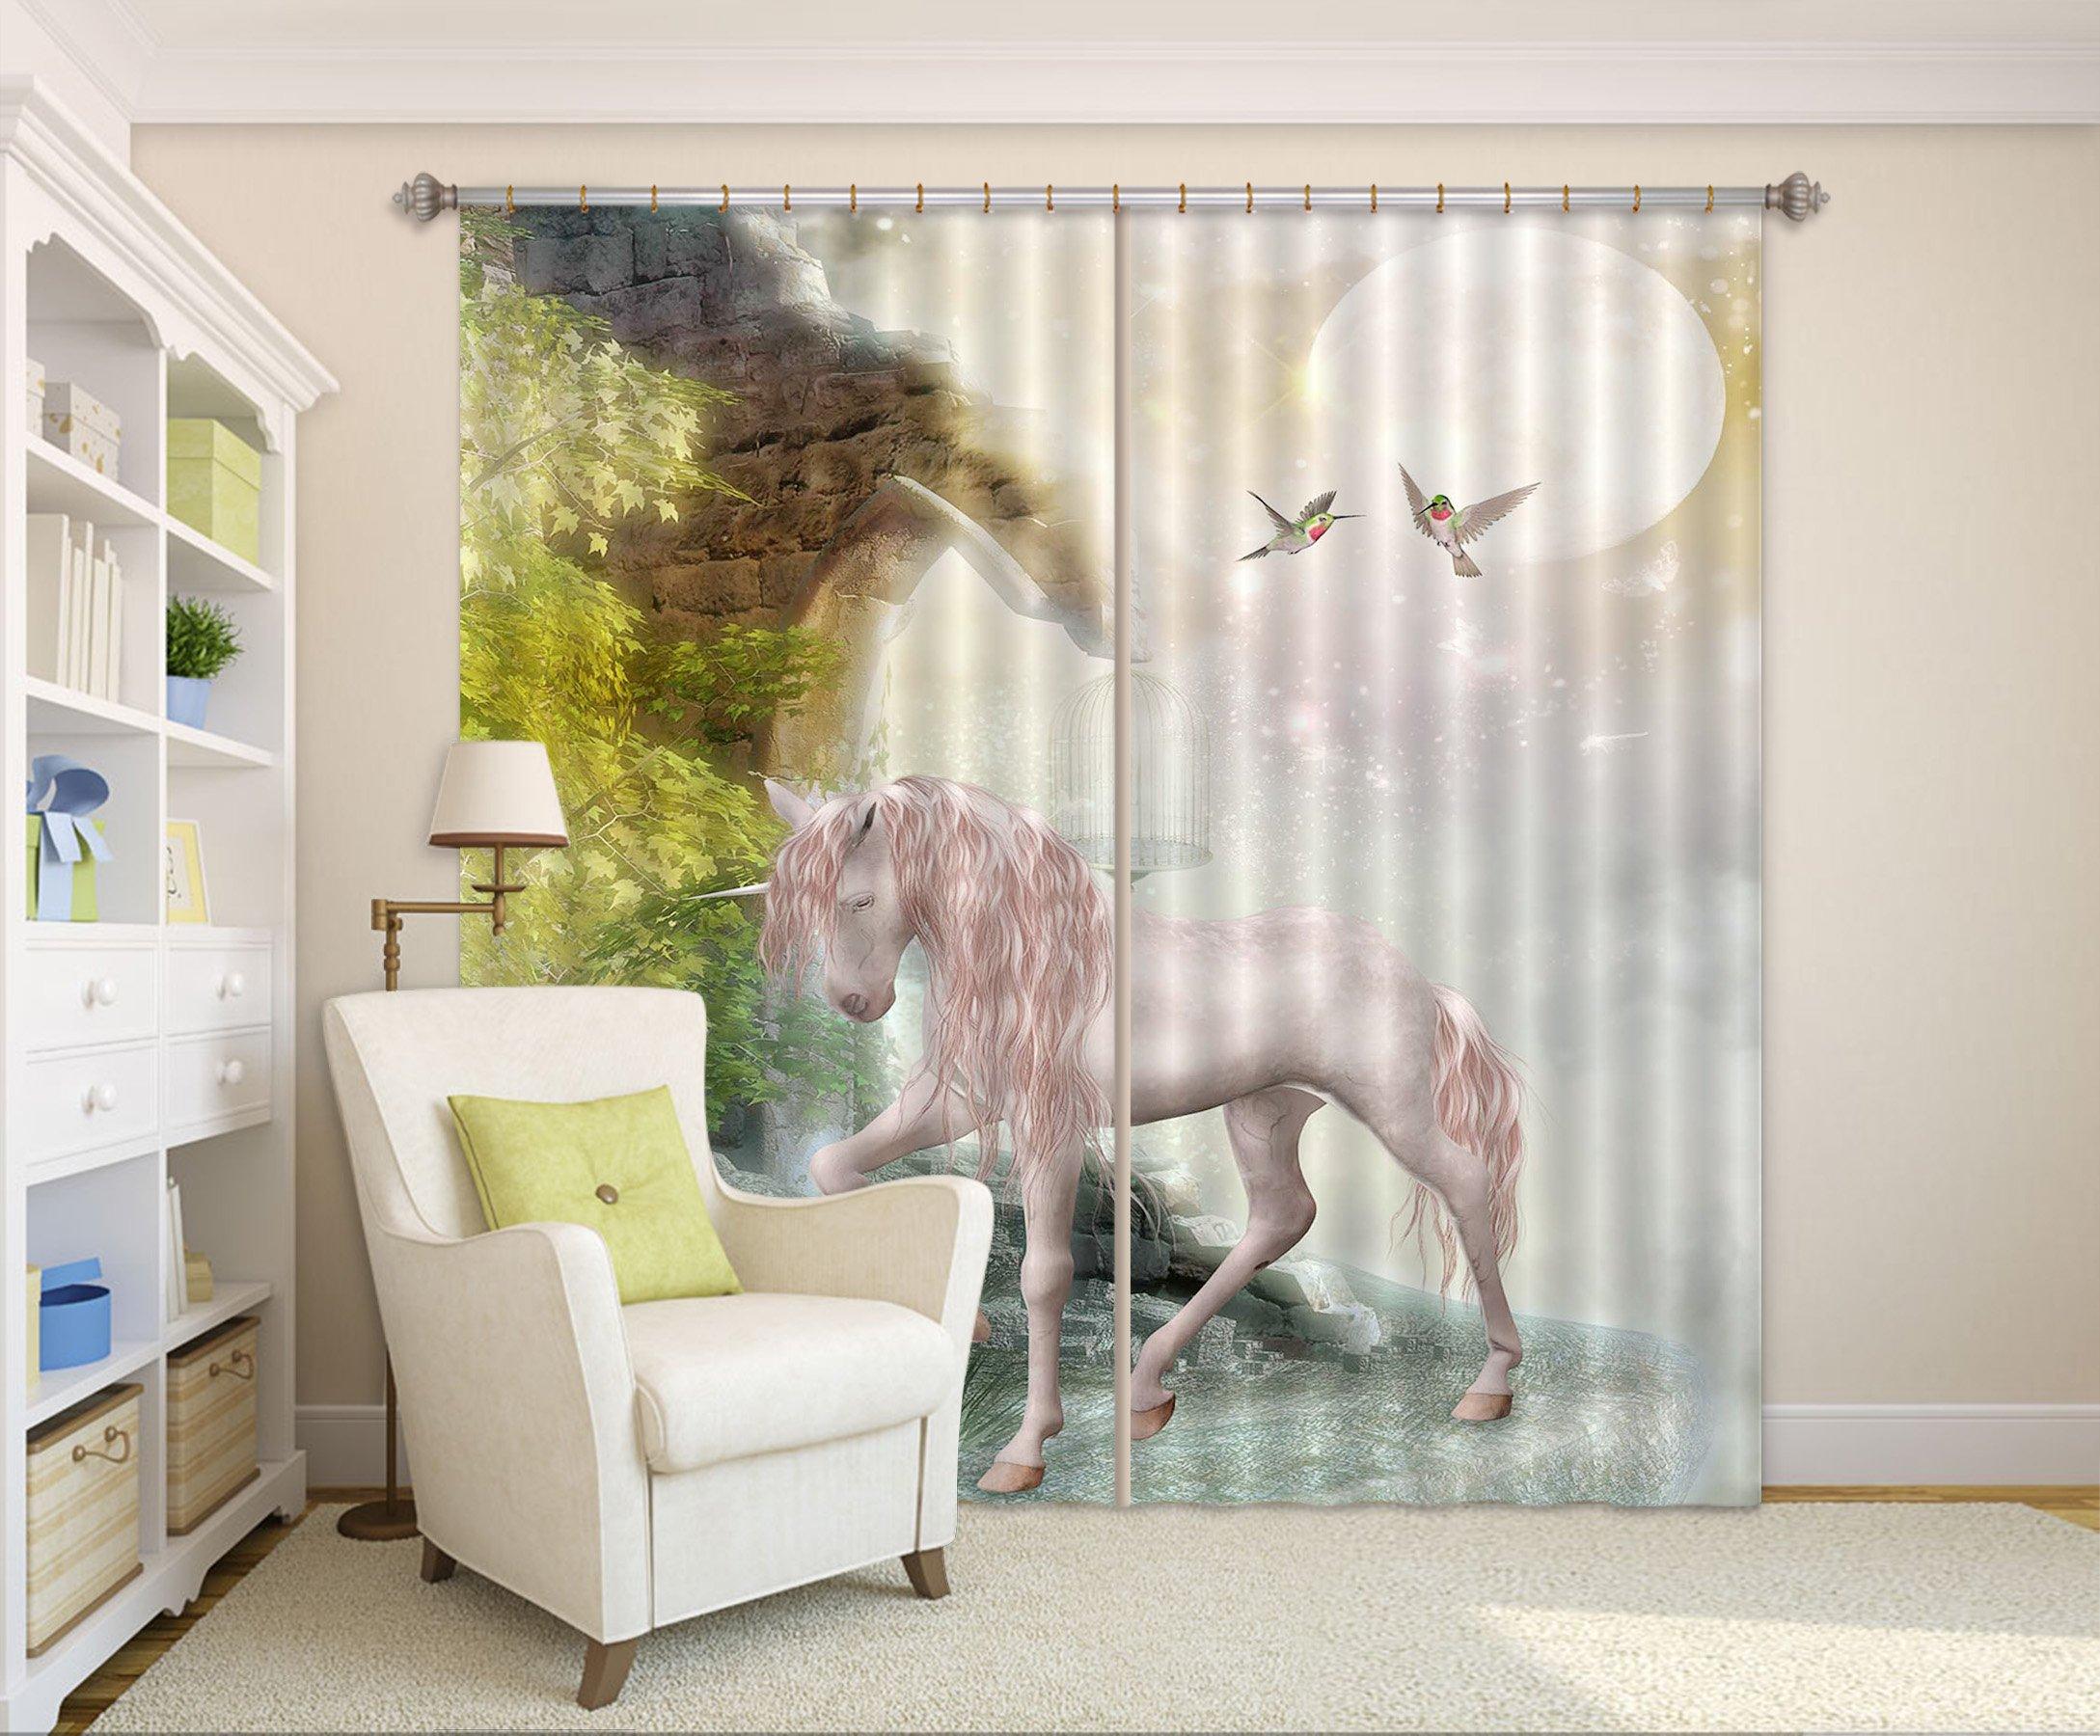 3D Moon Bird Cage Unicorns 093 Curtains Drapes Curtains AJ Creativity Home 